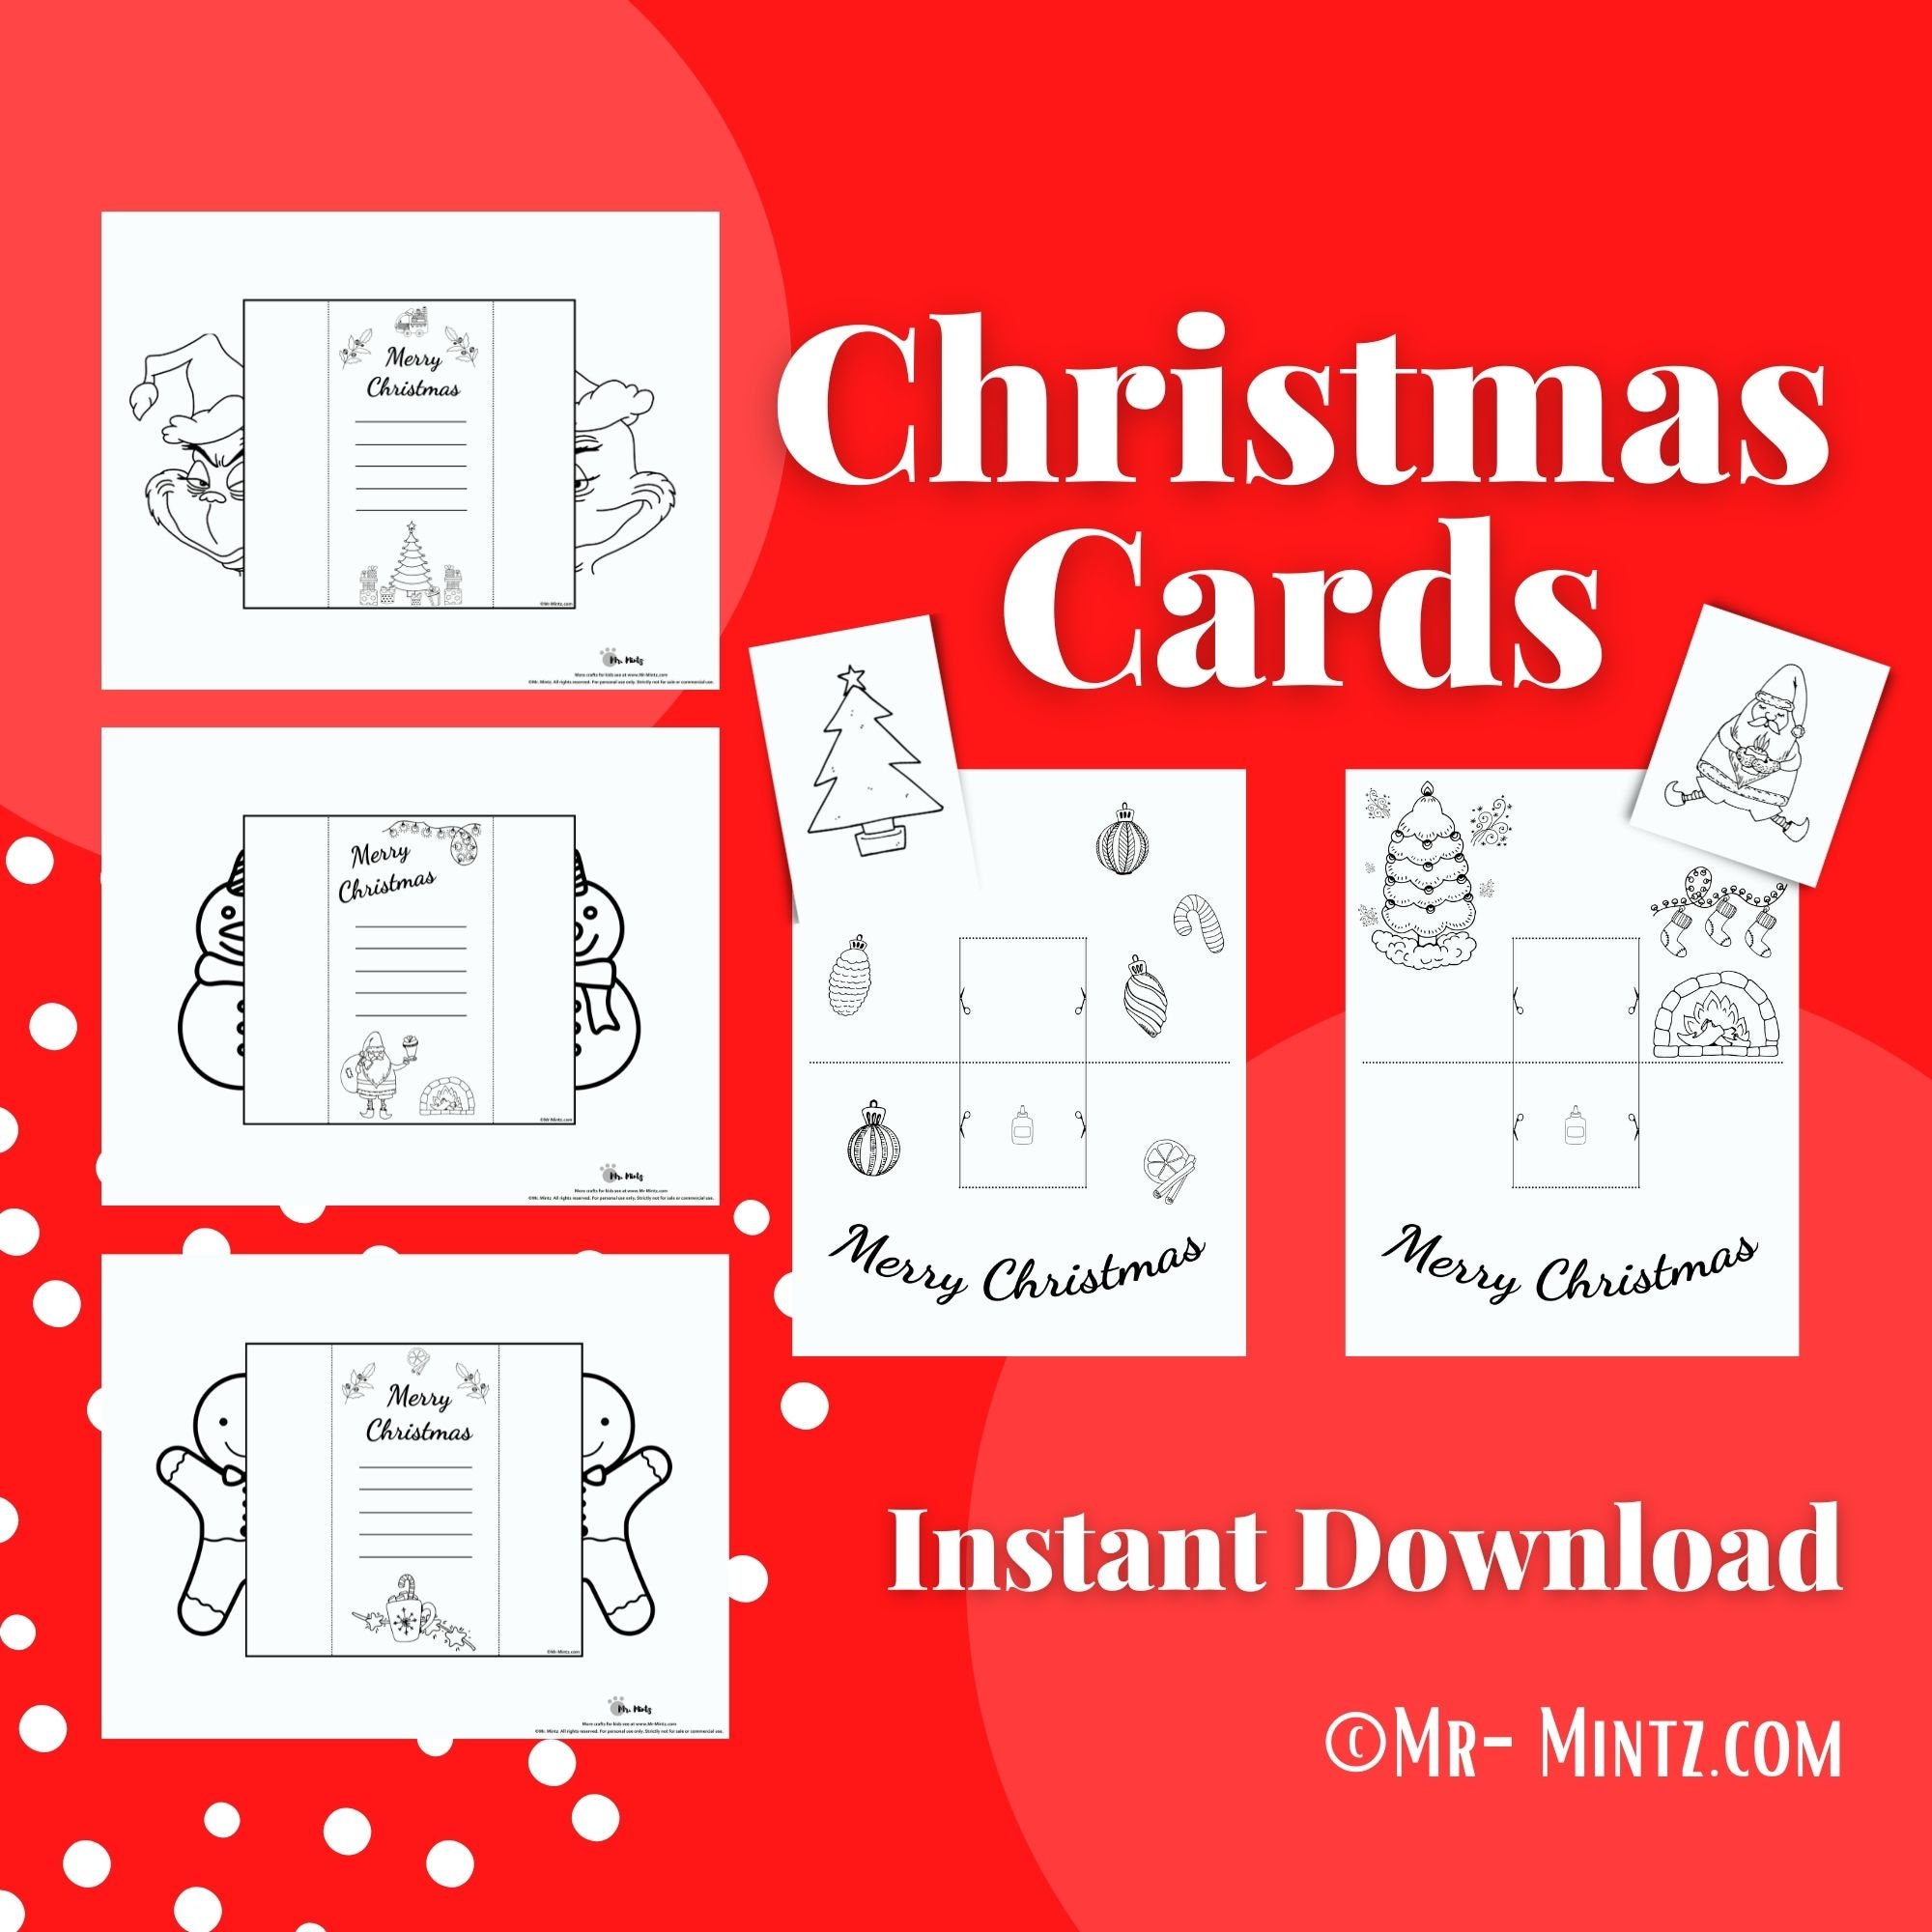 17 free printable Christmas cards to print, color, fold & give!, at